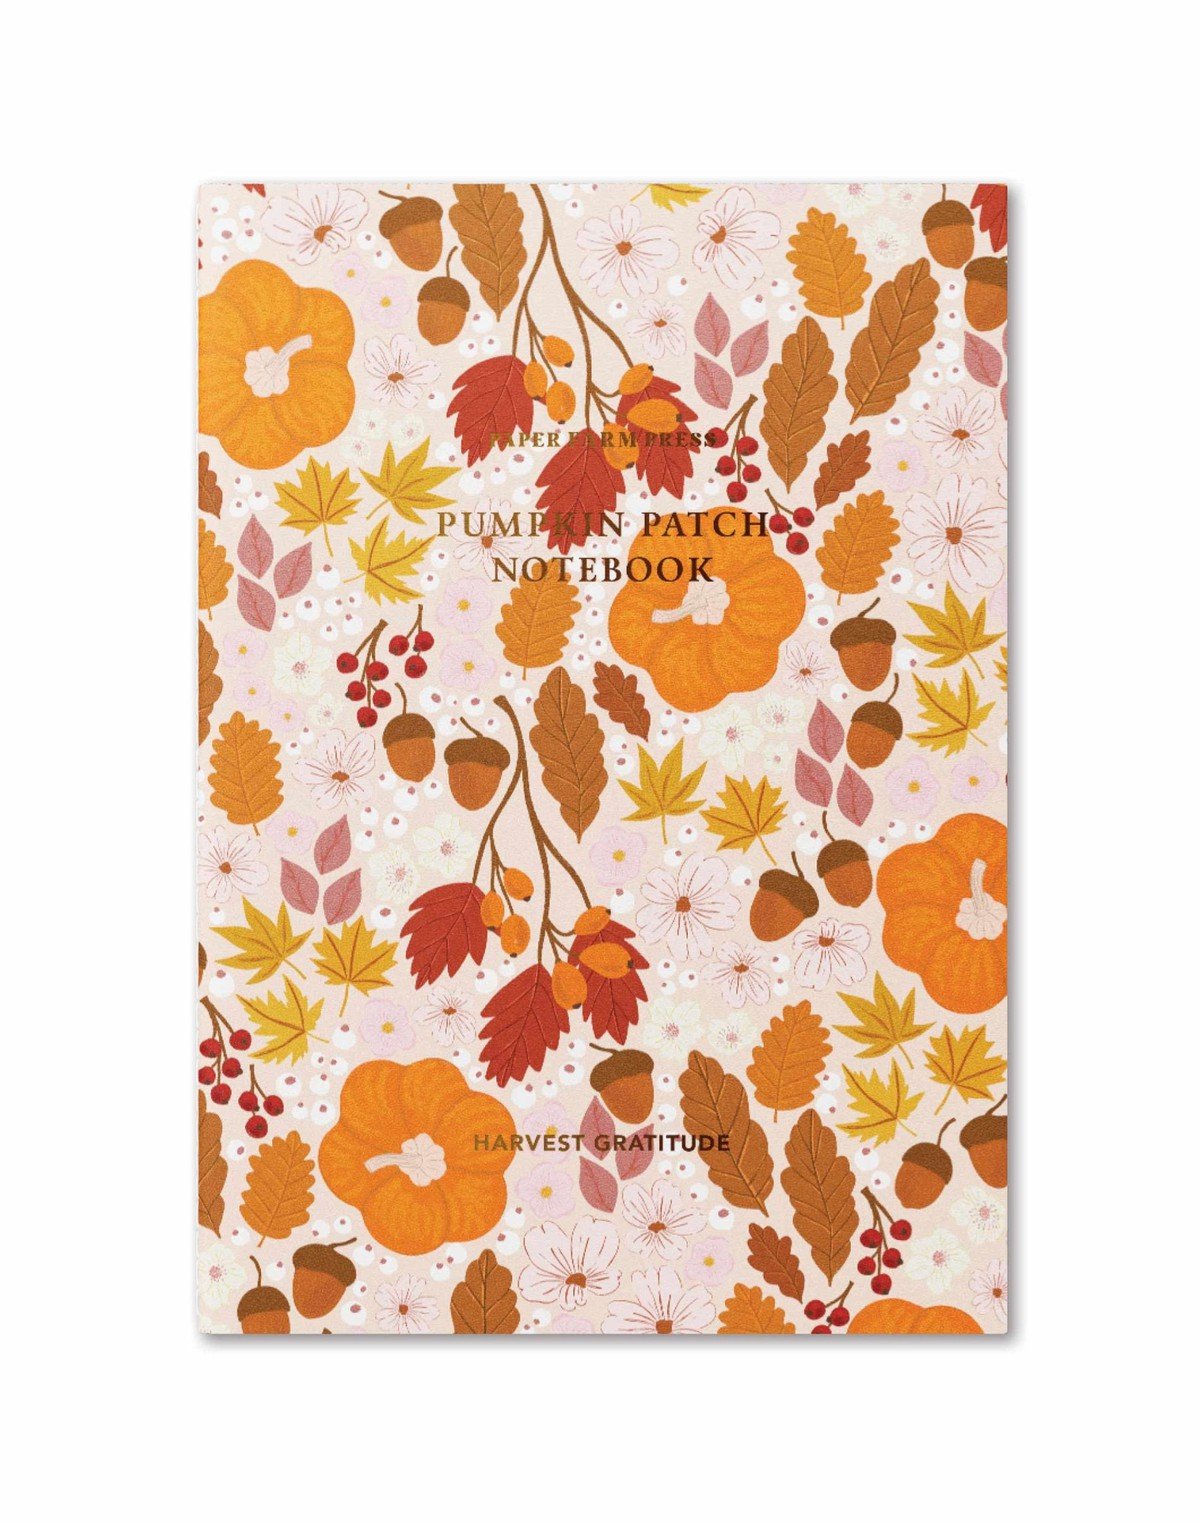 Harvest Gratitude Pumpkin Patch Stitched Notebook item